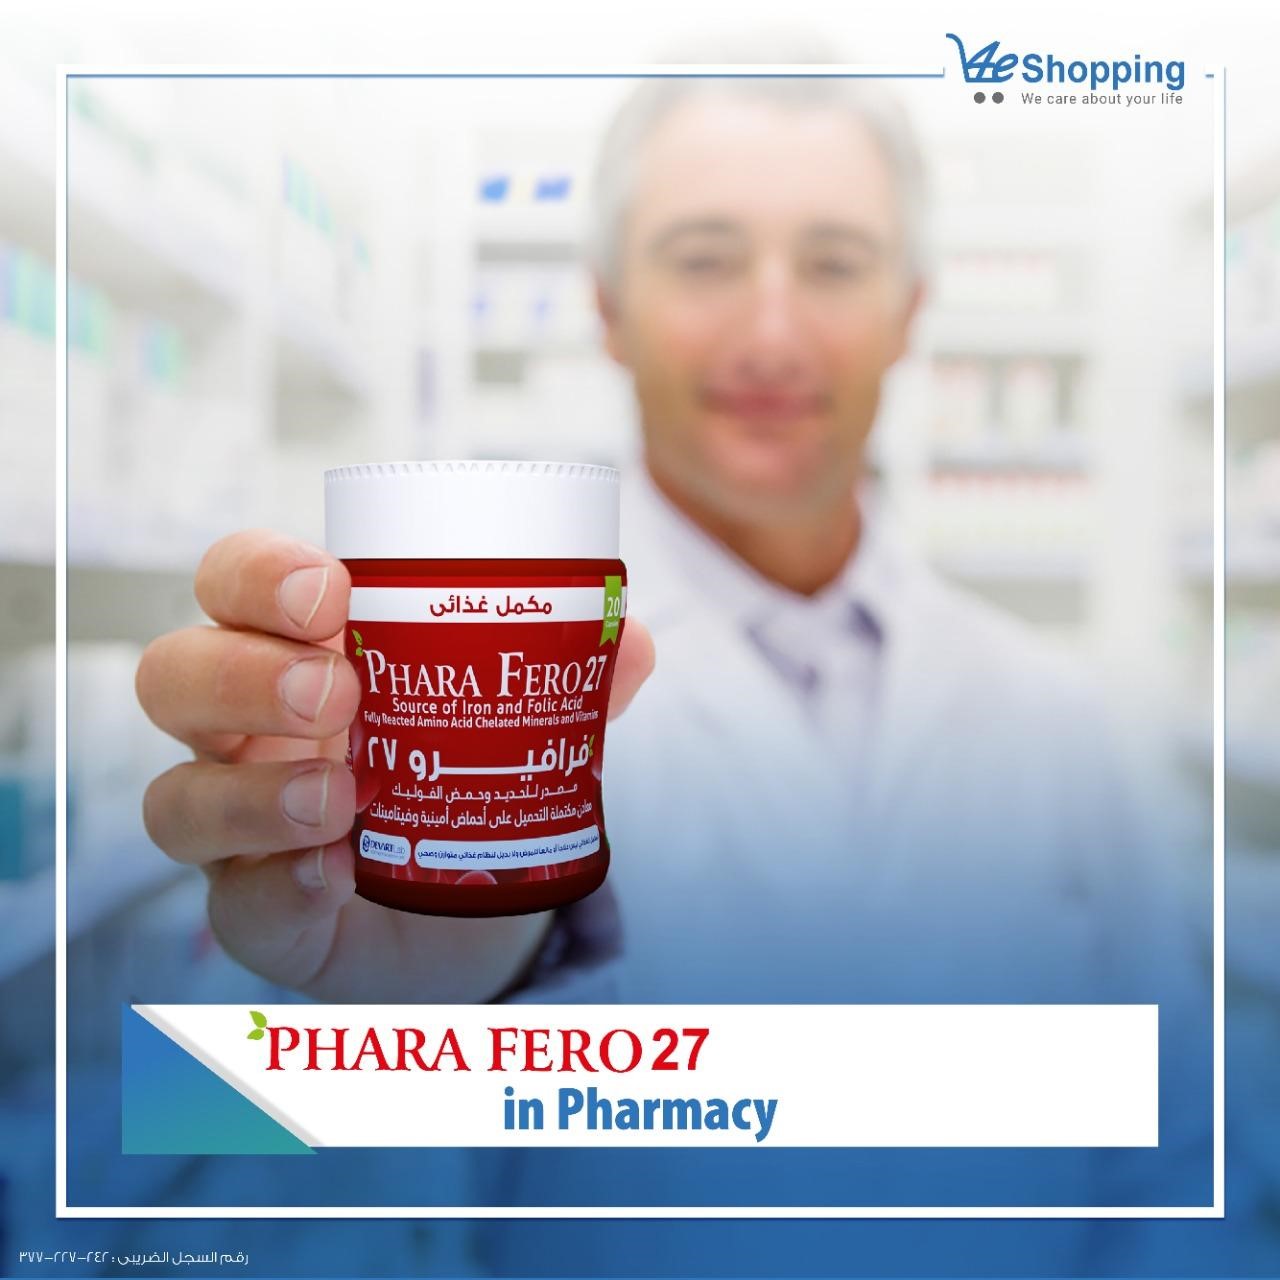 Pharafero 27 to increase profits in your pharmacy